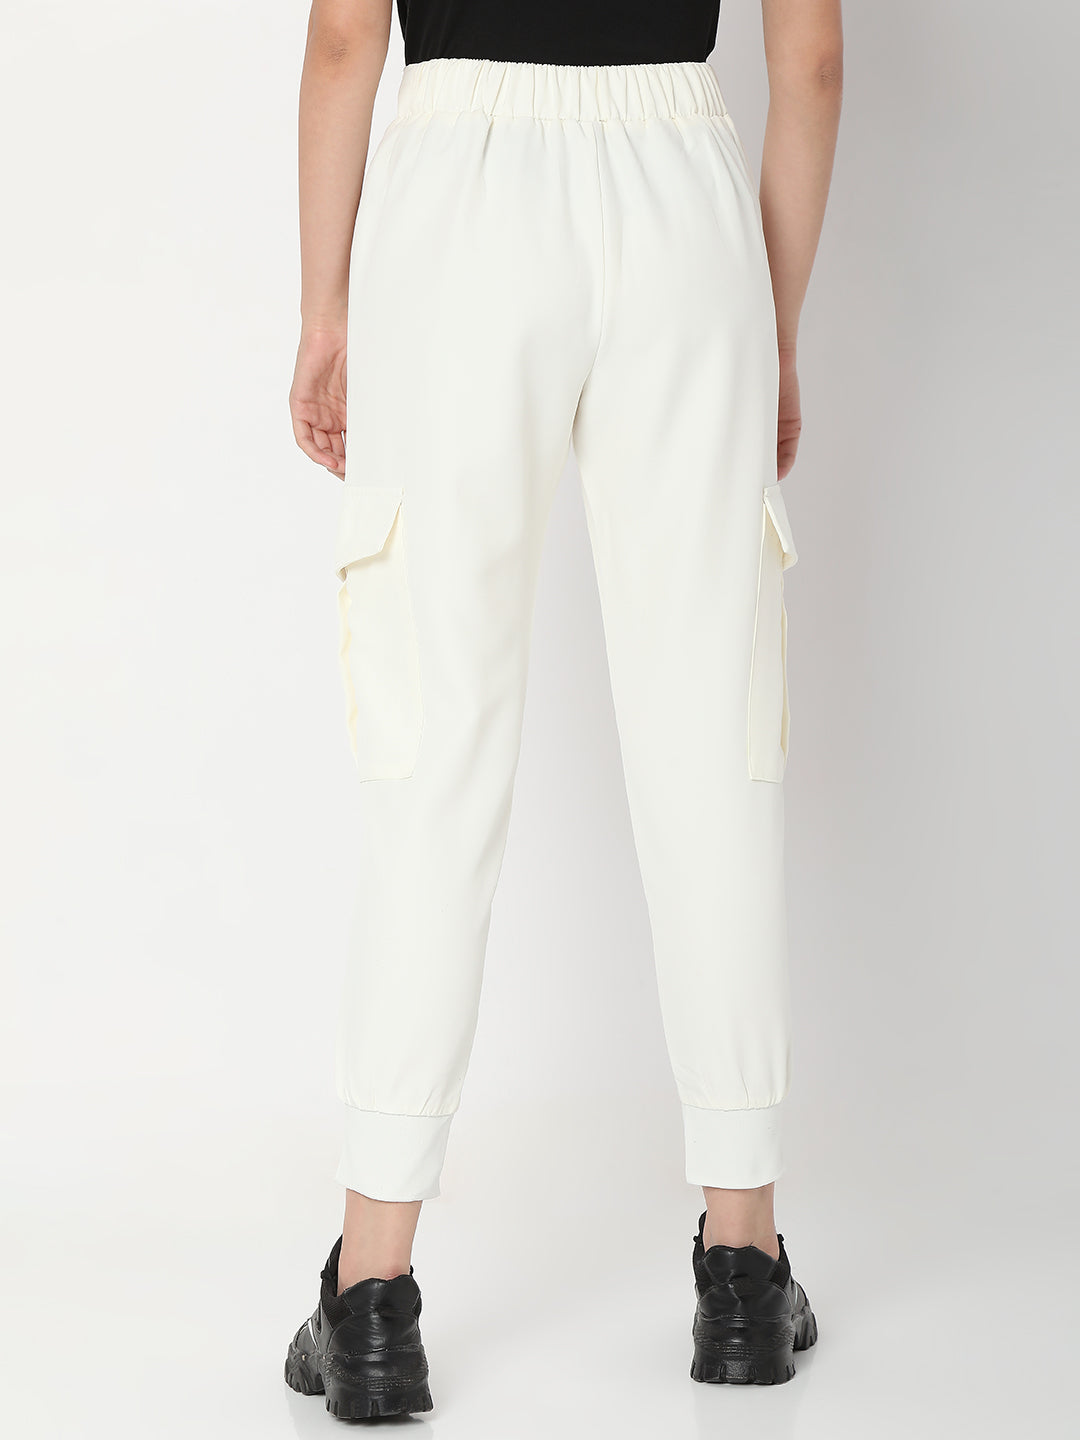 Spykar White Cotton Regular Fit Trackpants For Women